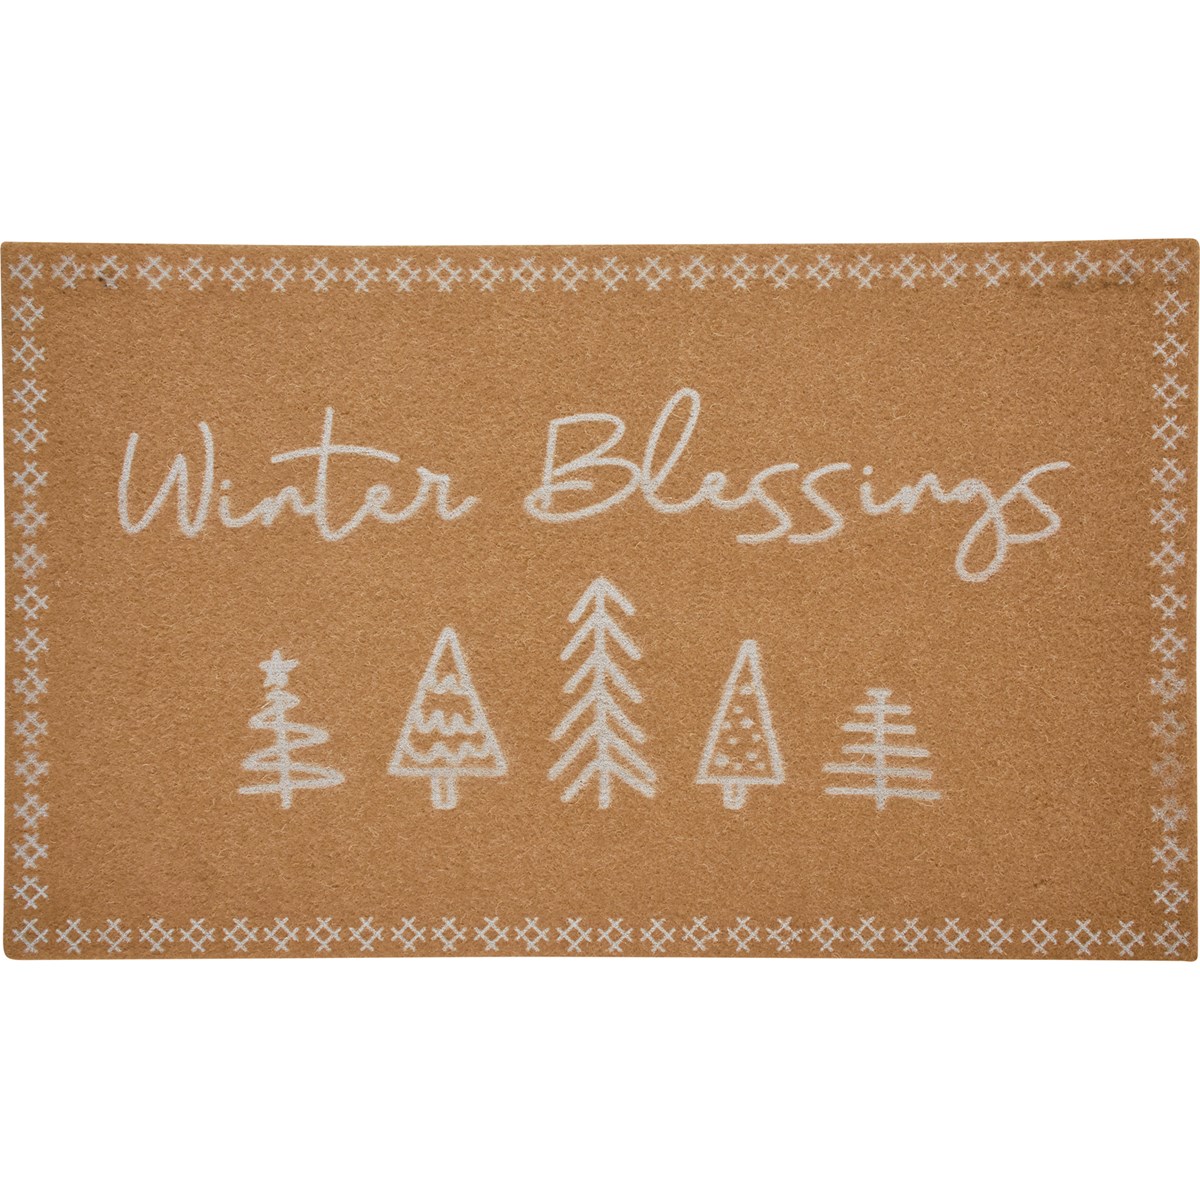 Winter Blessings Rug - Polyester, PVC skid-resistant backing